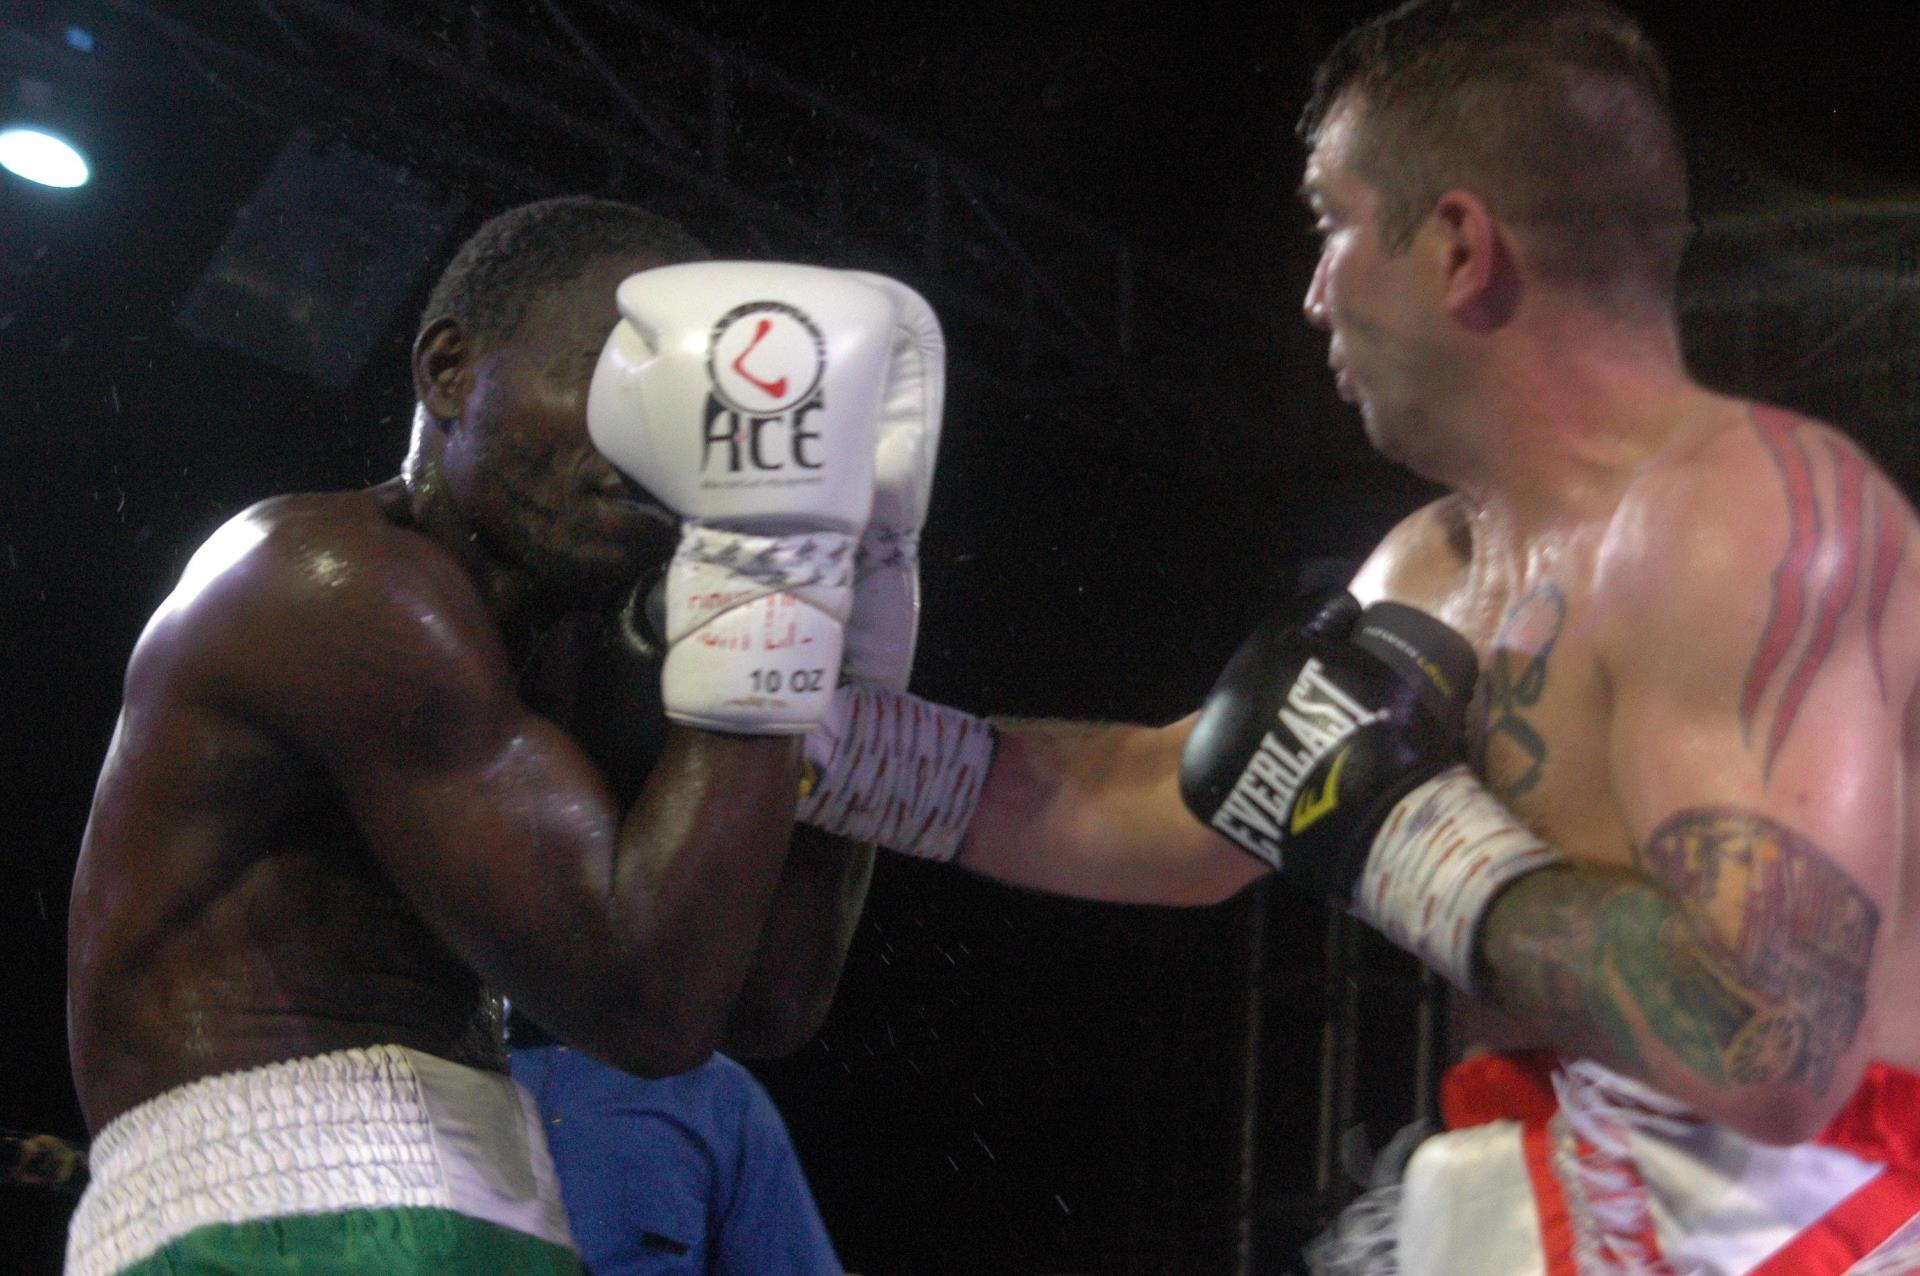 Boxer Lee McAllister landing a punch on opponent.